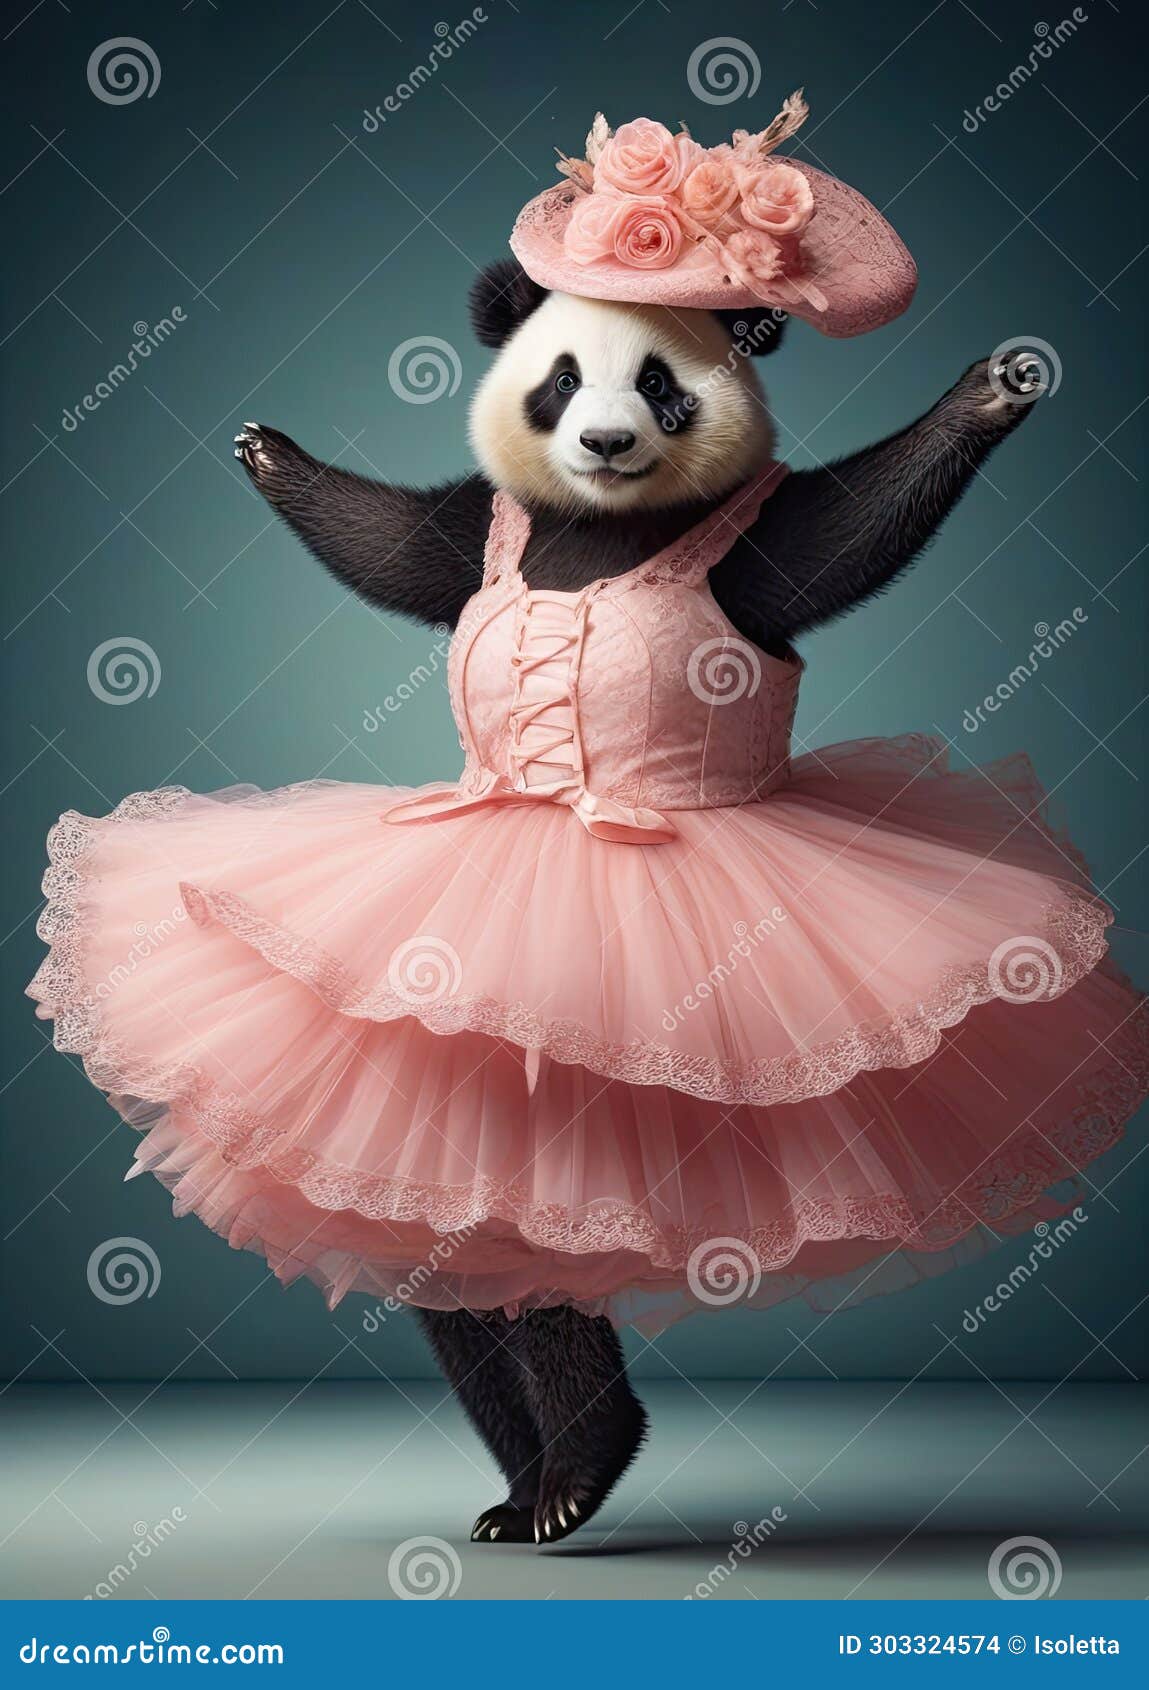 ariadna vasquez share dancing bear pink dress photos